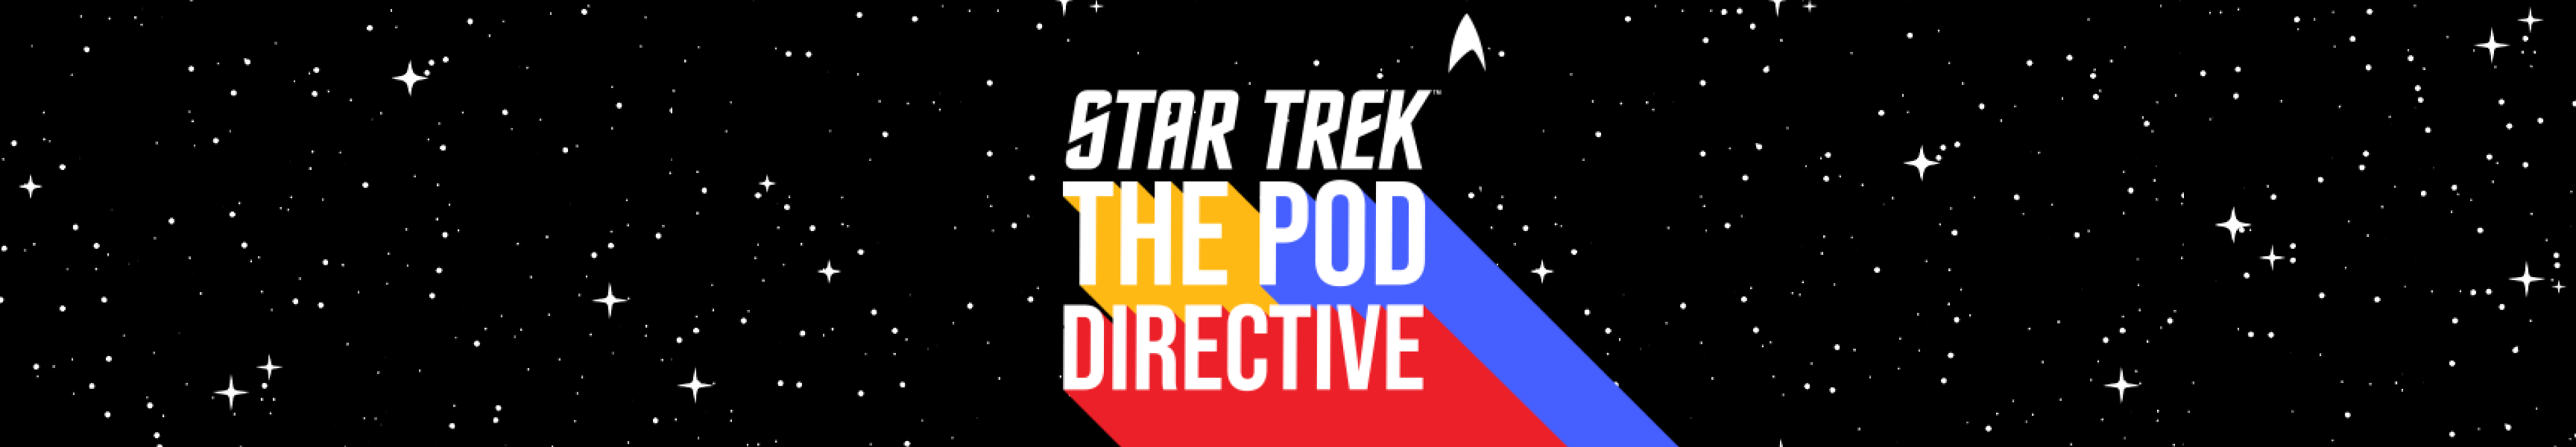 Star Trek: La Directiva Pod